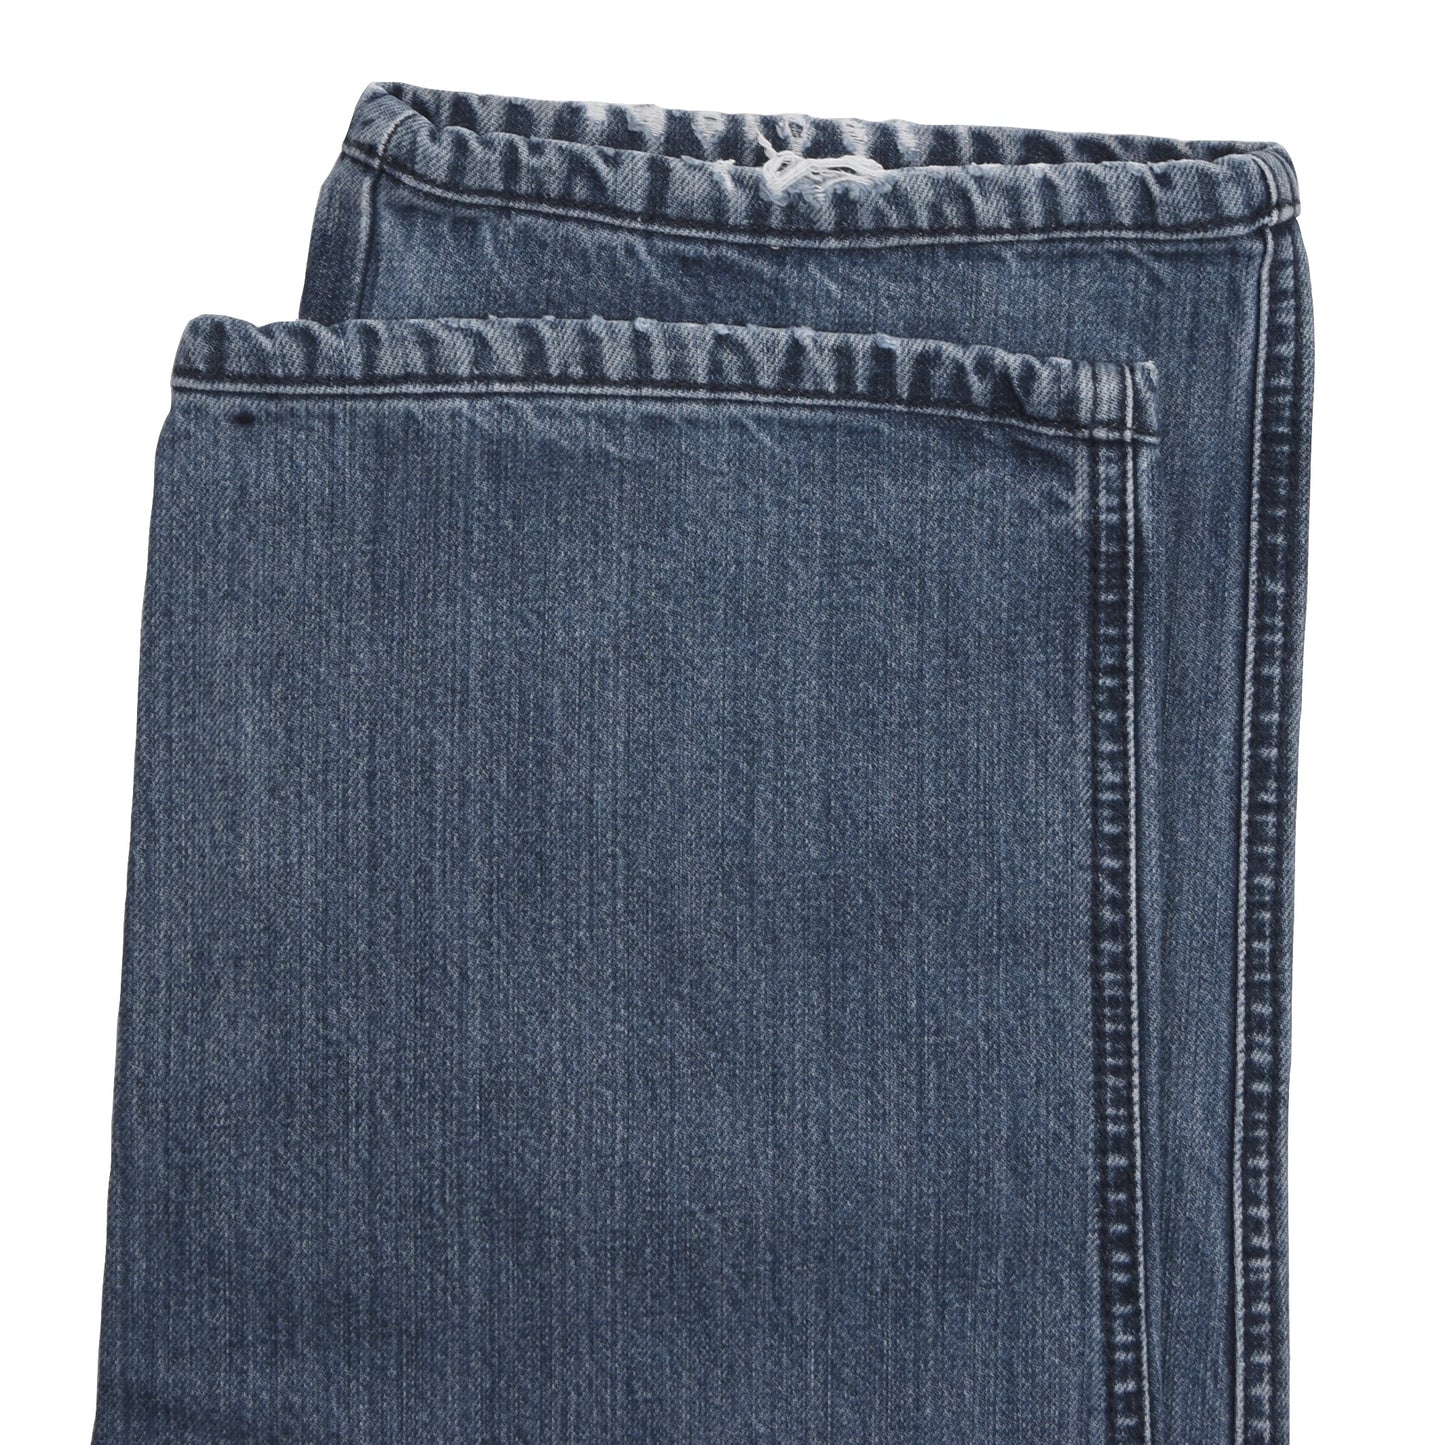 Brioni Jeans Size 40 Inch Waist - Blue